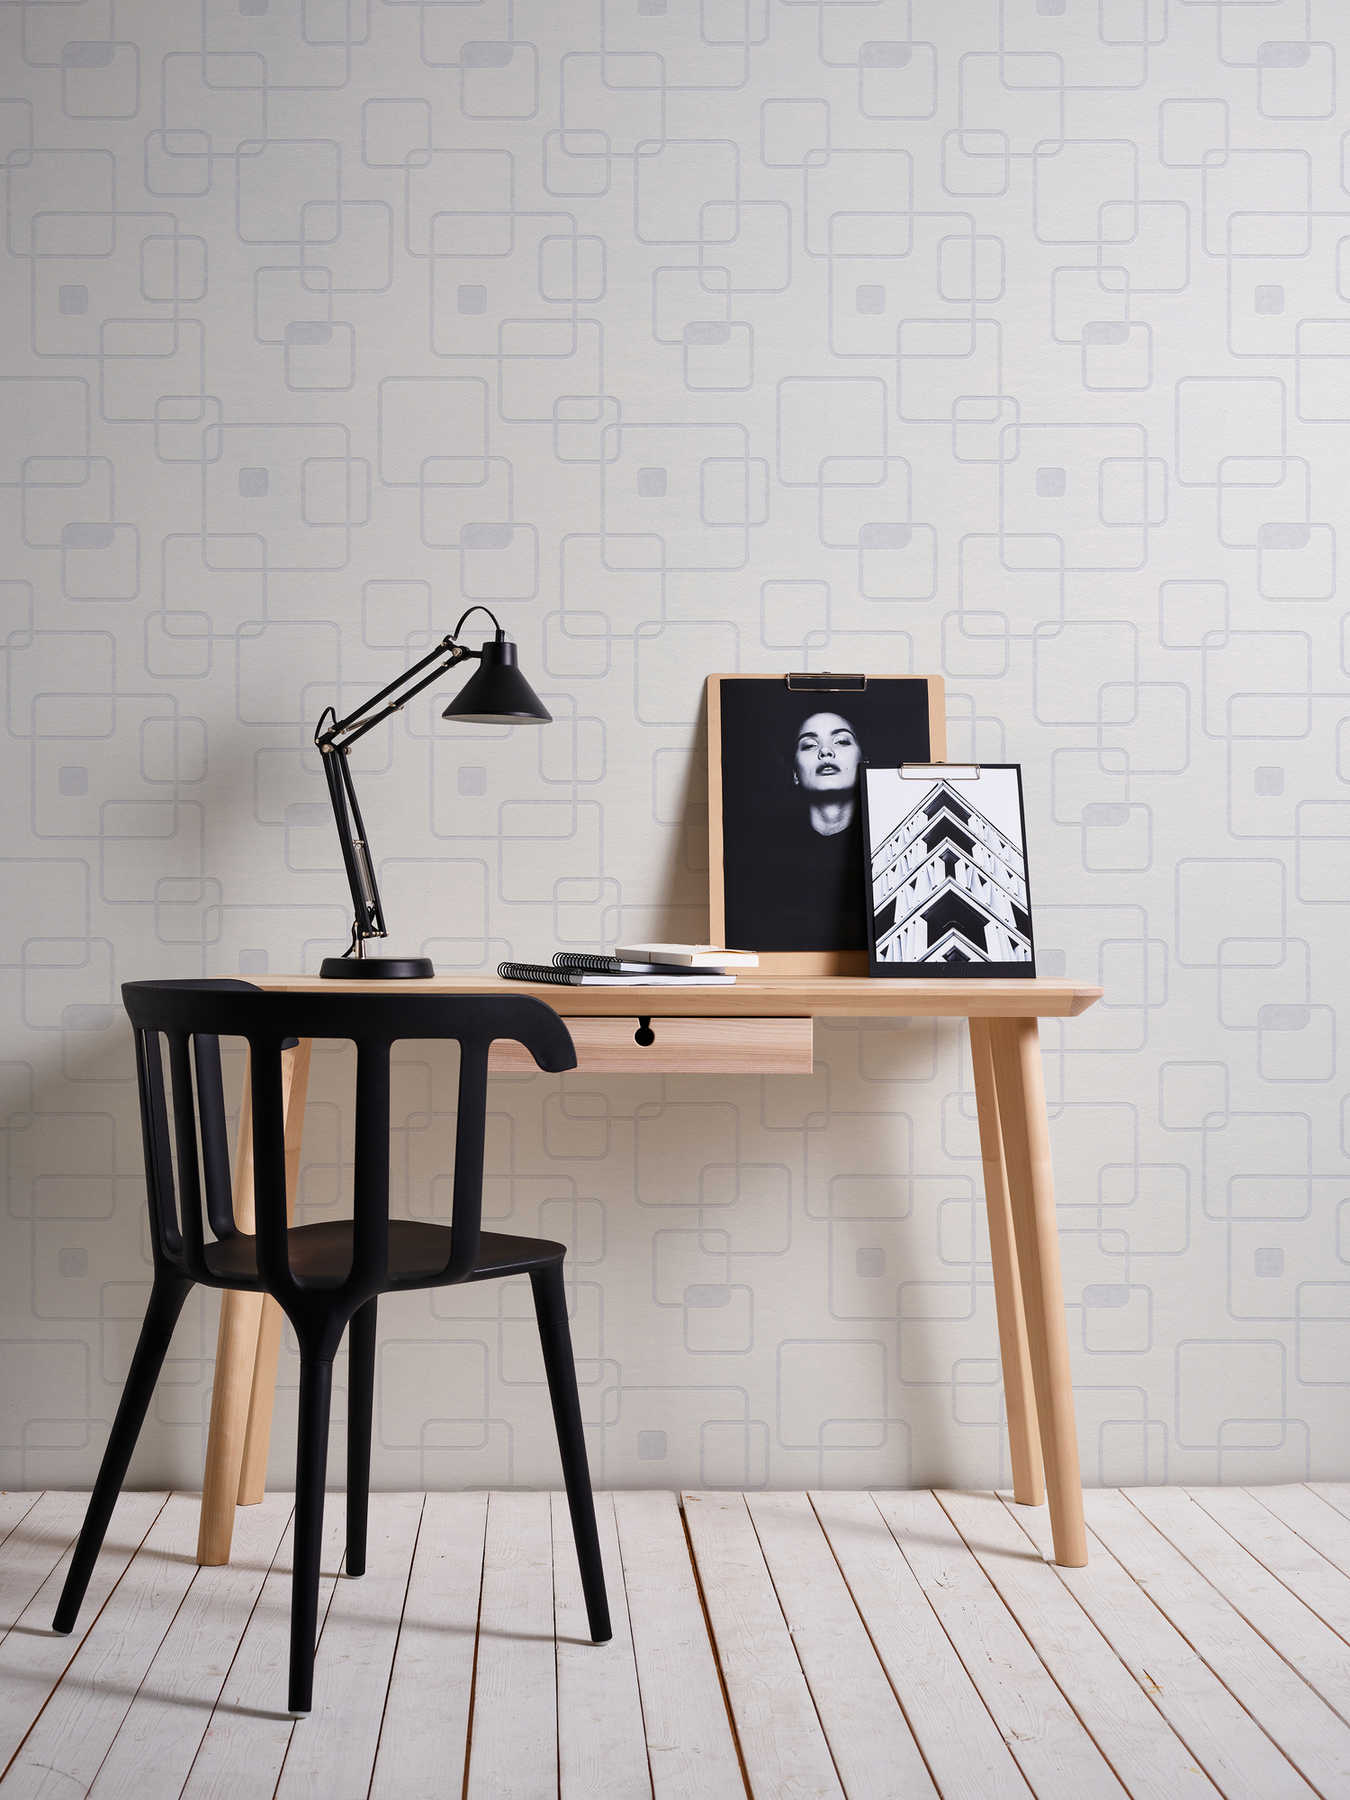             Wallpaper geometric retro pattern and 3D effect - white
        